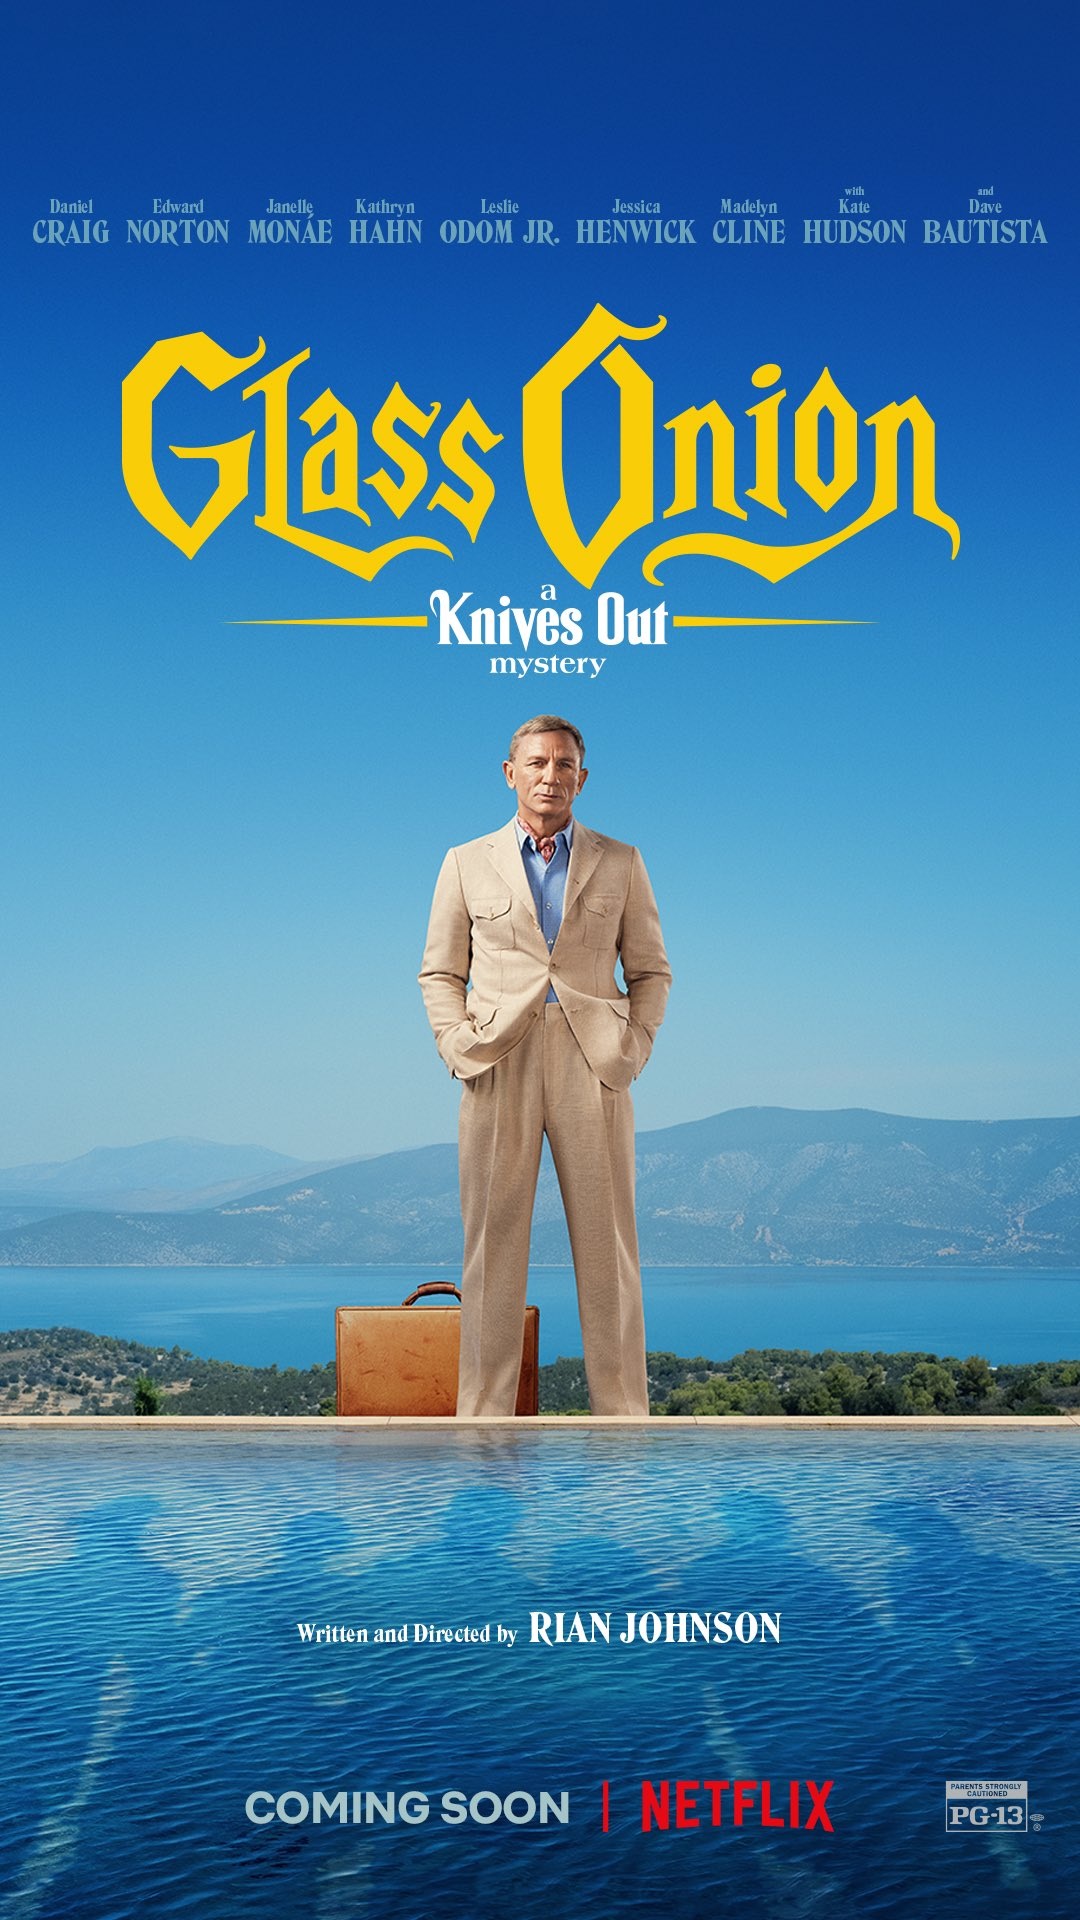 movie reviews the glass onion